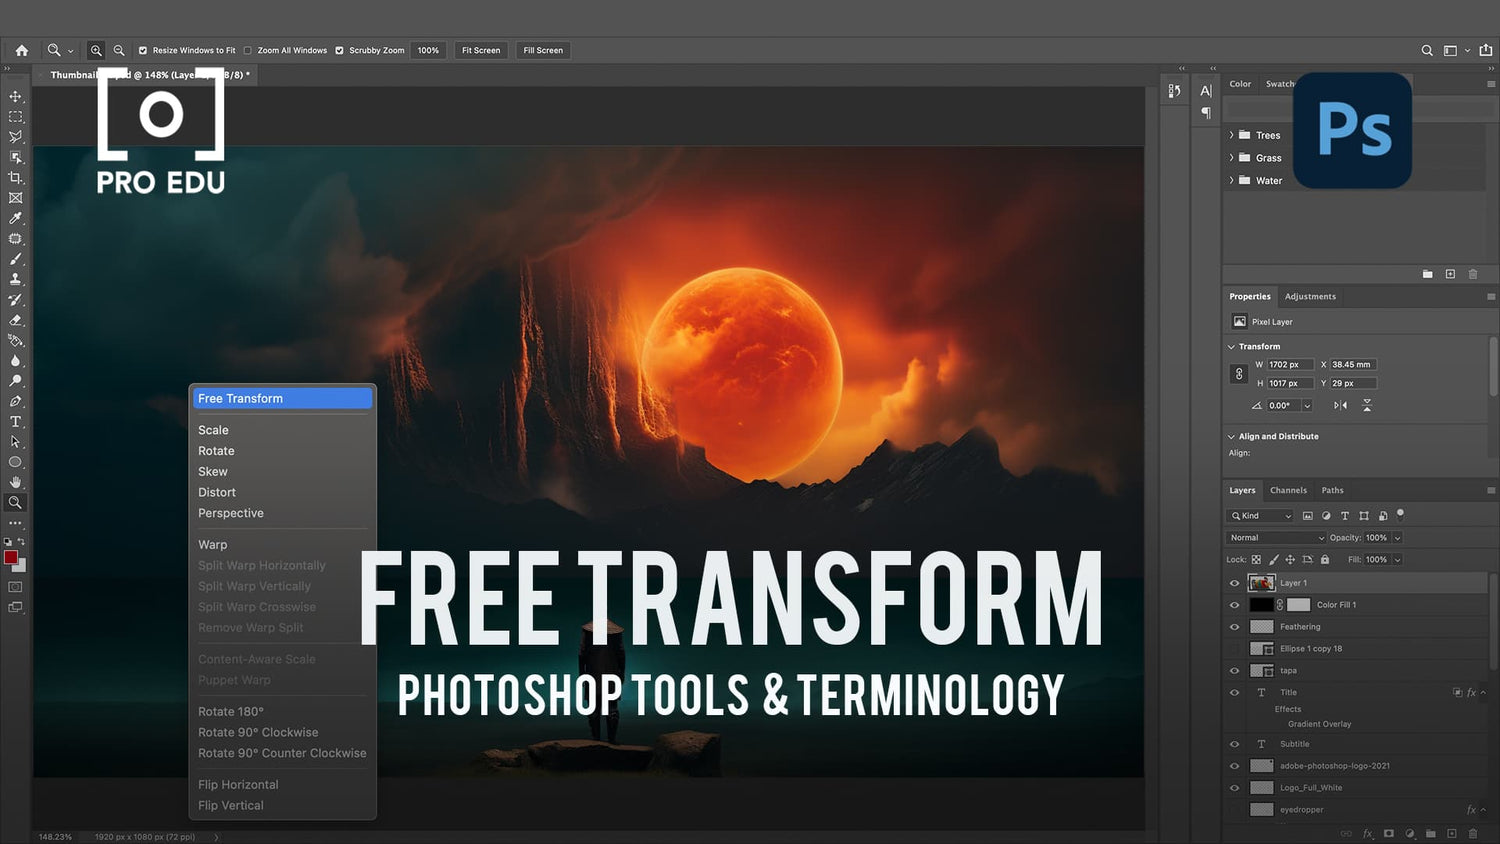 Free Transform Tool in Photoshop - PRO EDU Tutorial